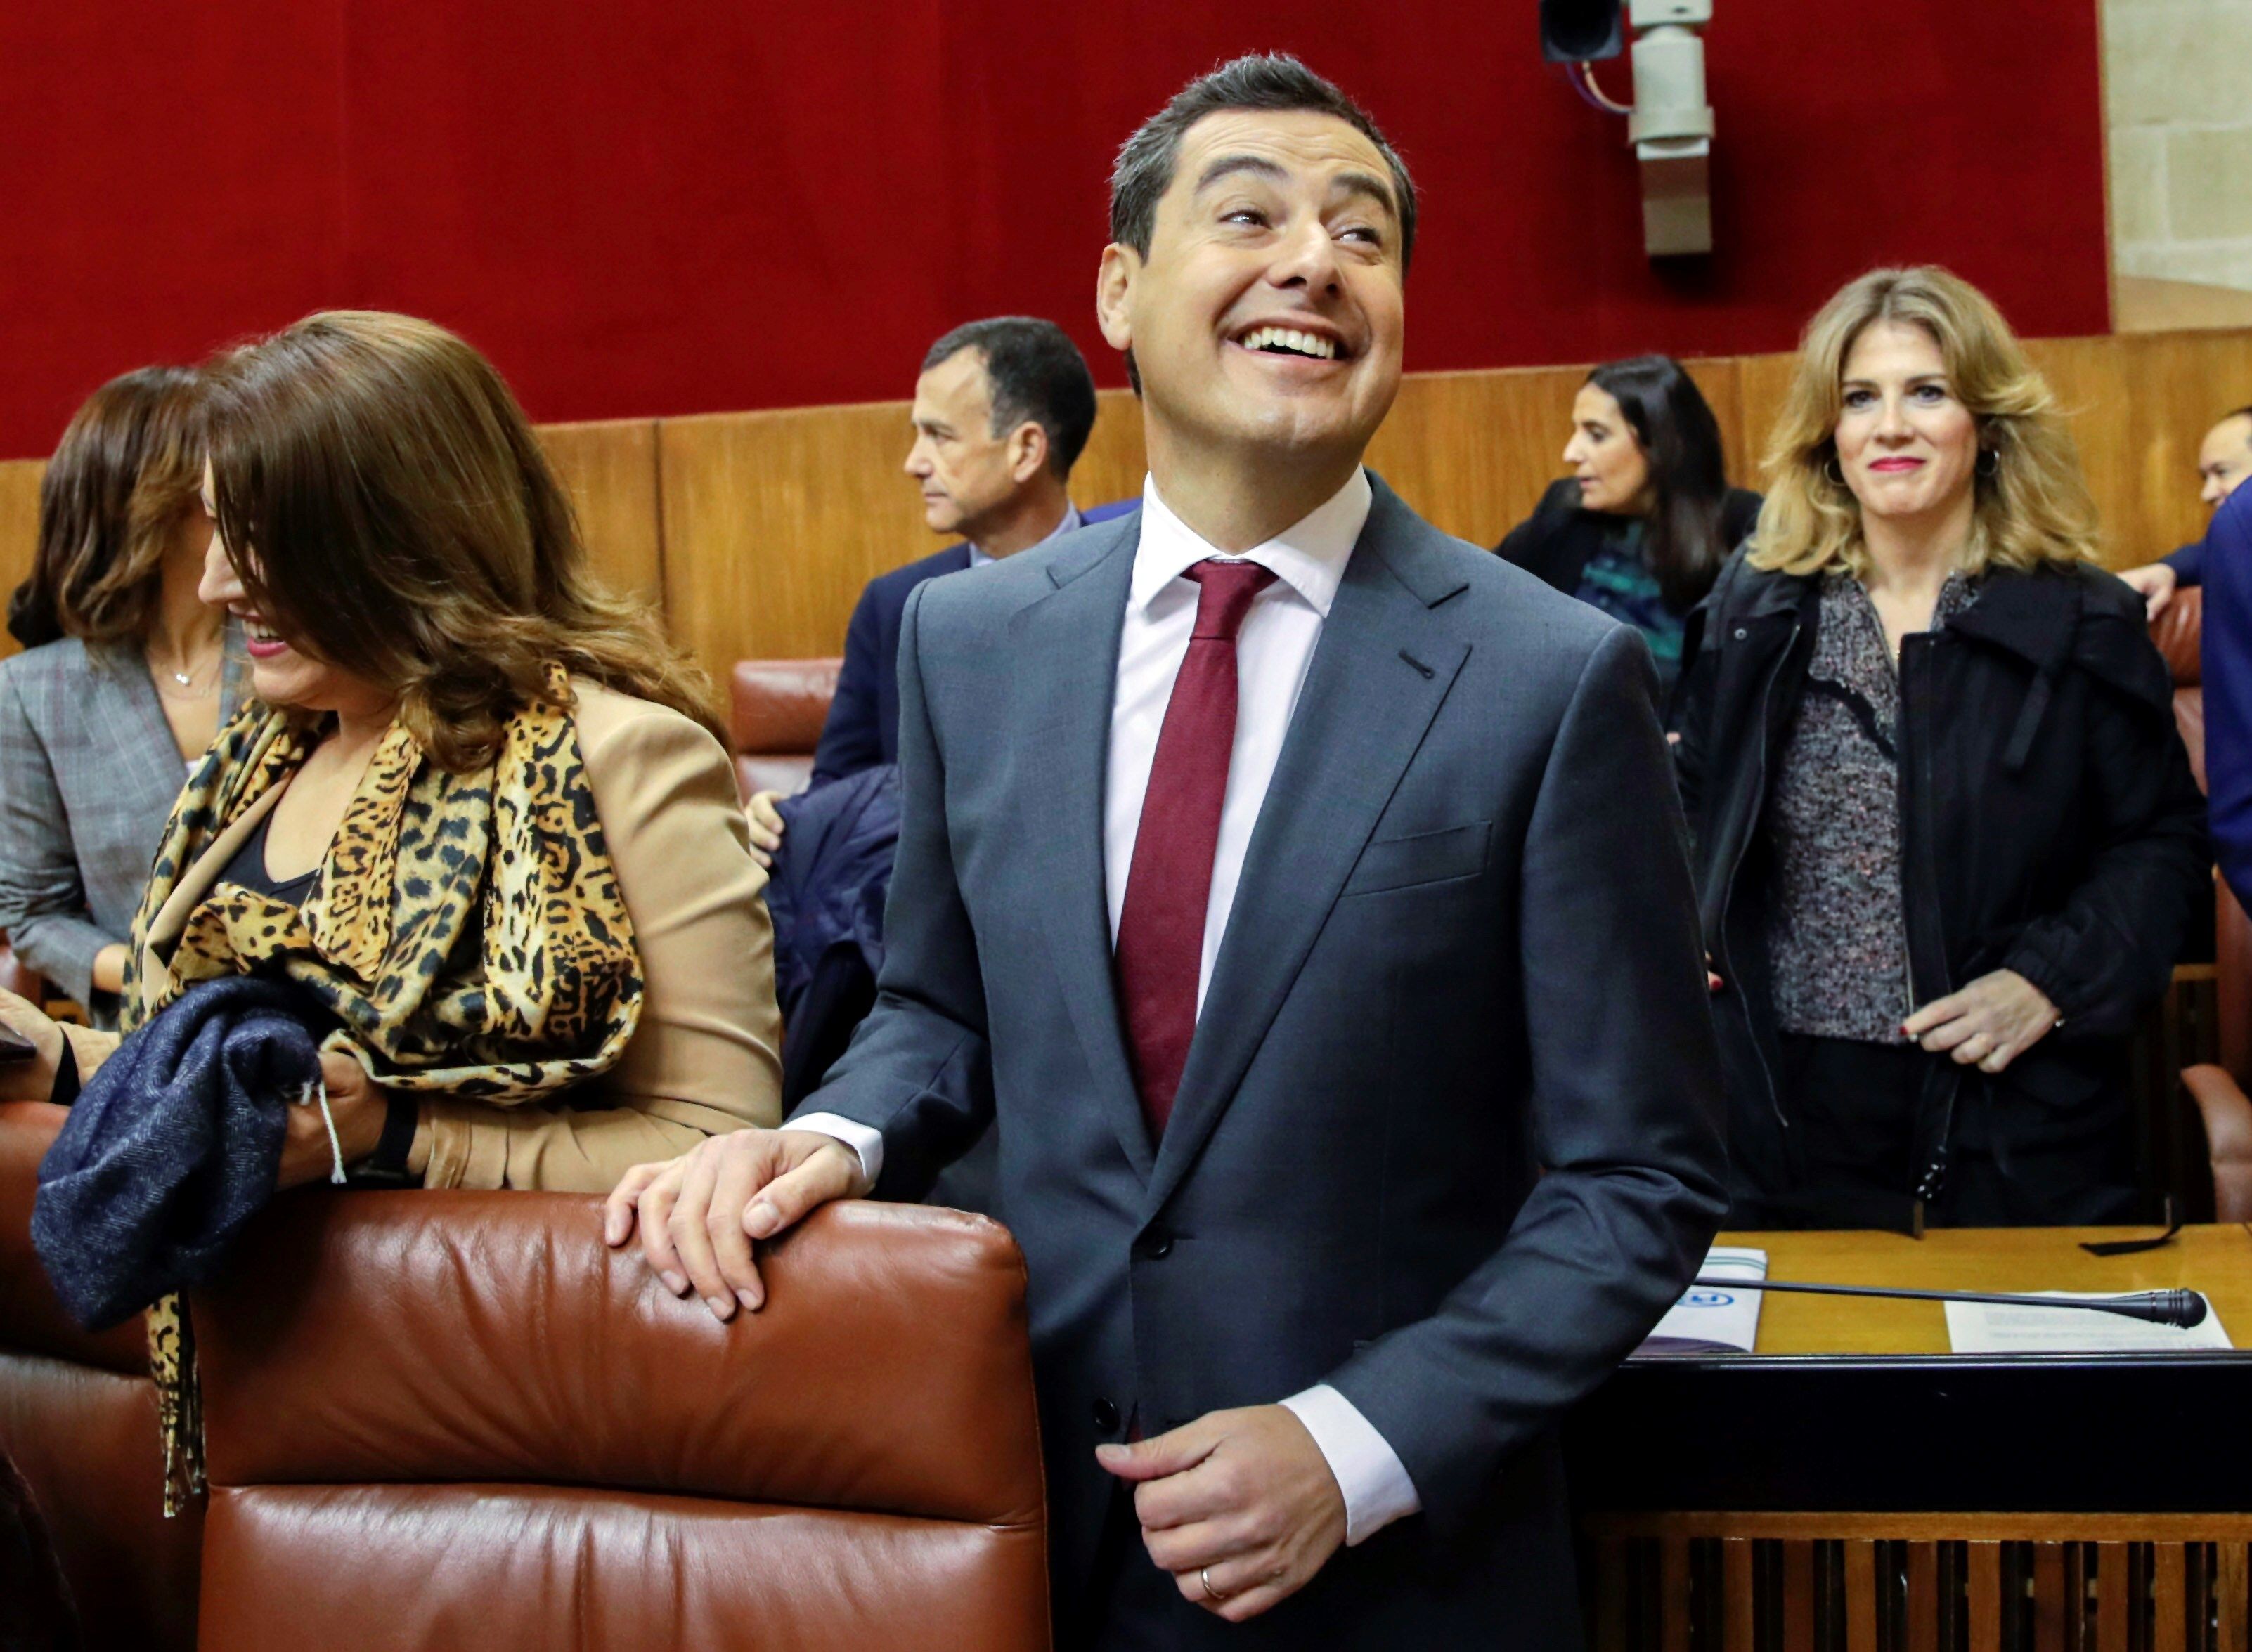 Juanma Moreno, new president of Andalusia thanks to the far right